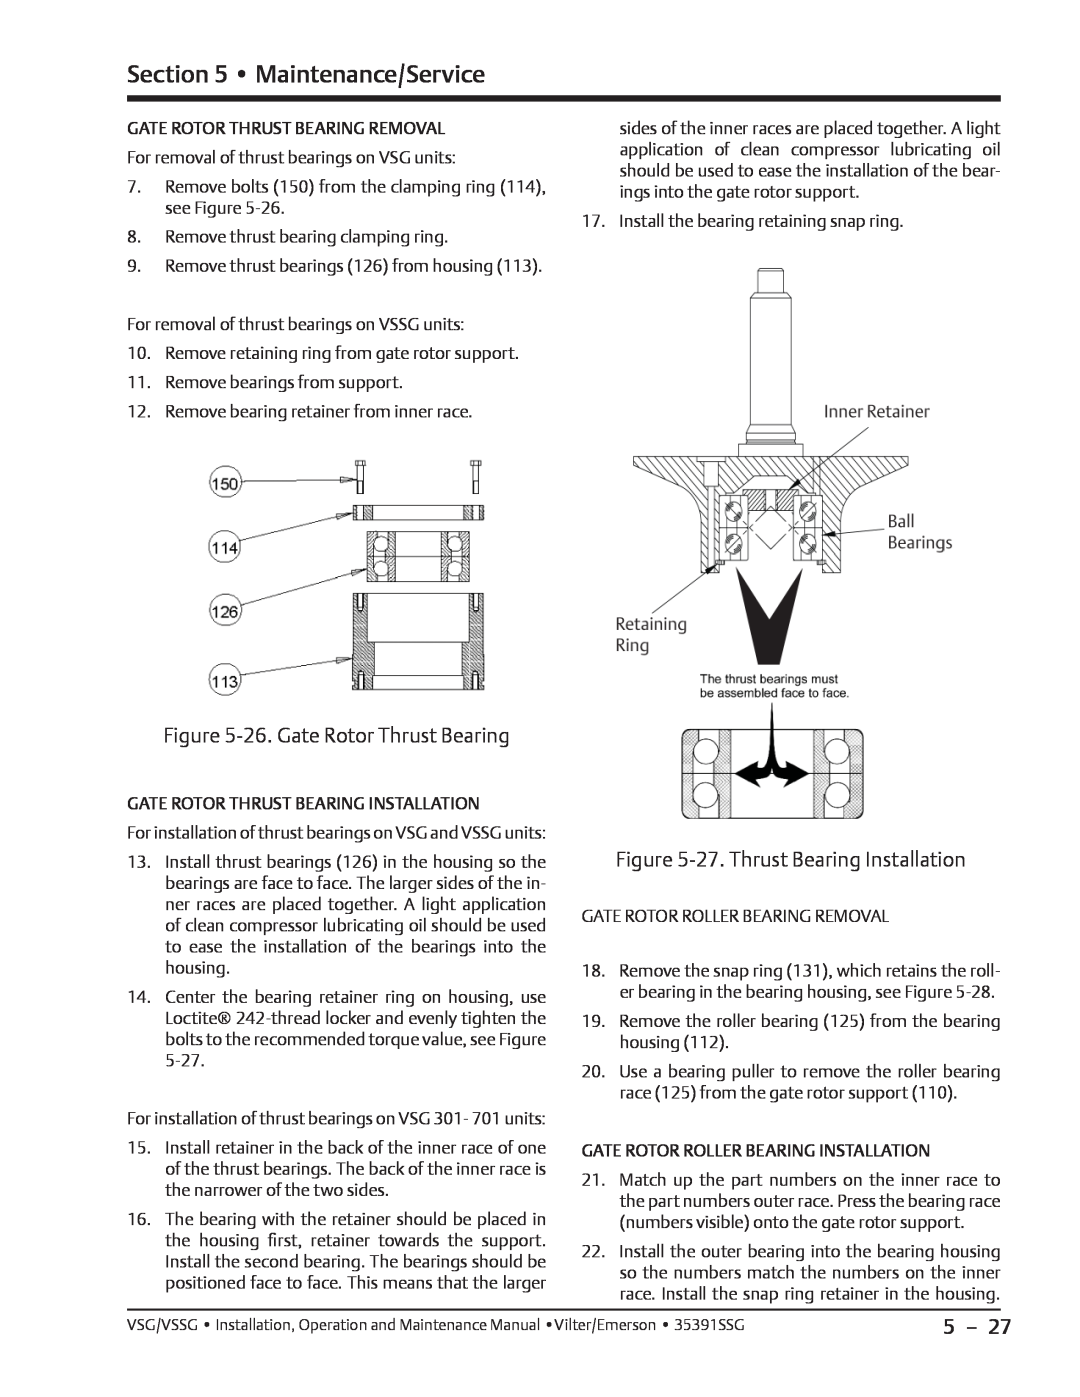 Emerson VSG, VSSG manual 26. Gate Rotor Thrust Bearing, 27. Thrust Bearing Installation, Maintenance/Service 